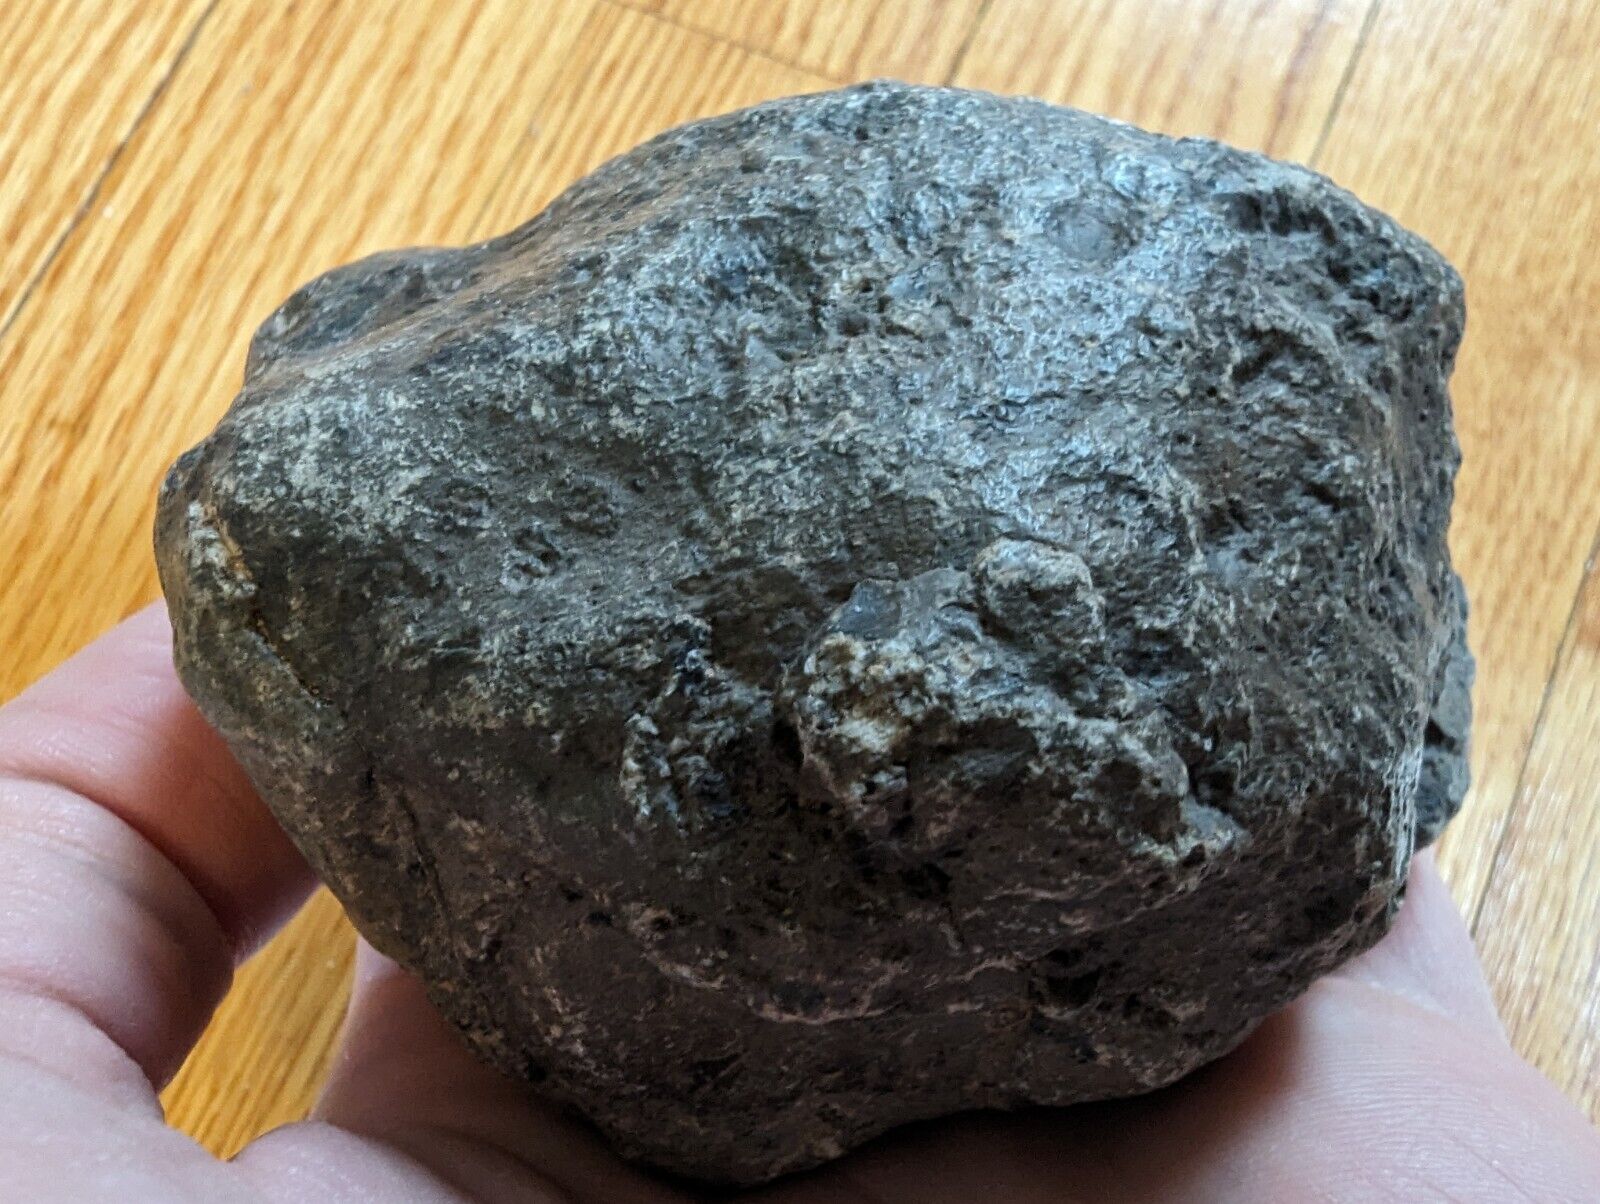 Jikharra 001 Eucrite Melt Breccia Meteorite - Asteroid Vesta - 488.9g 